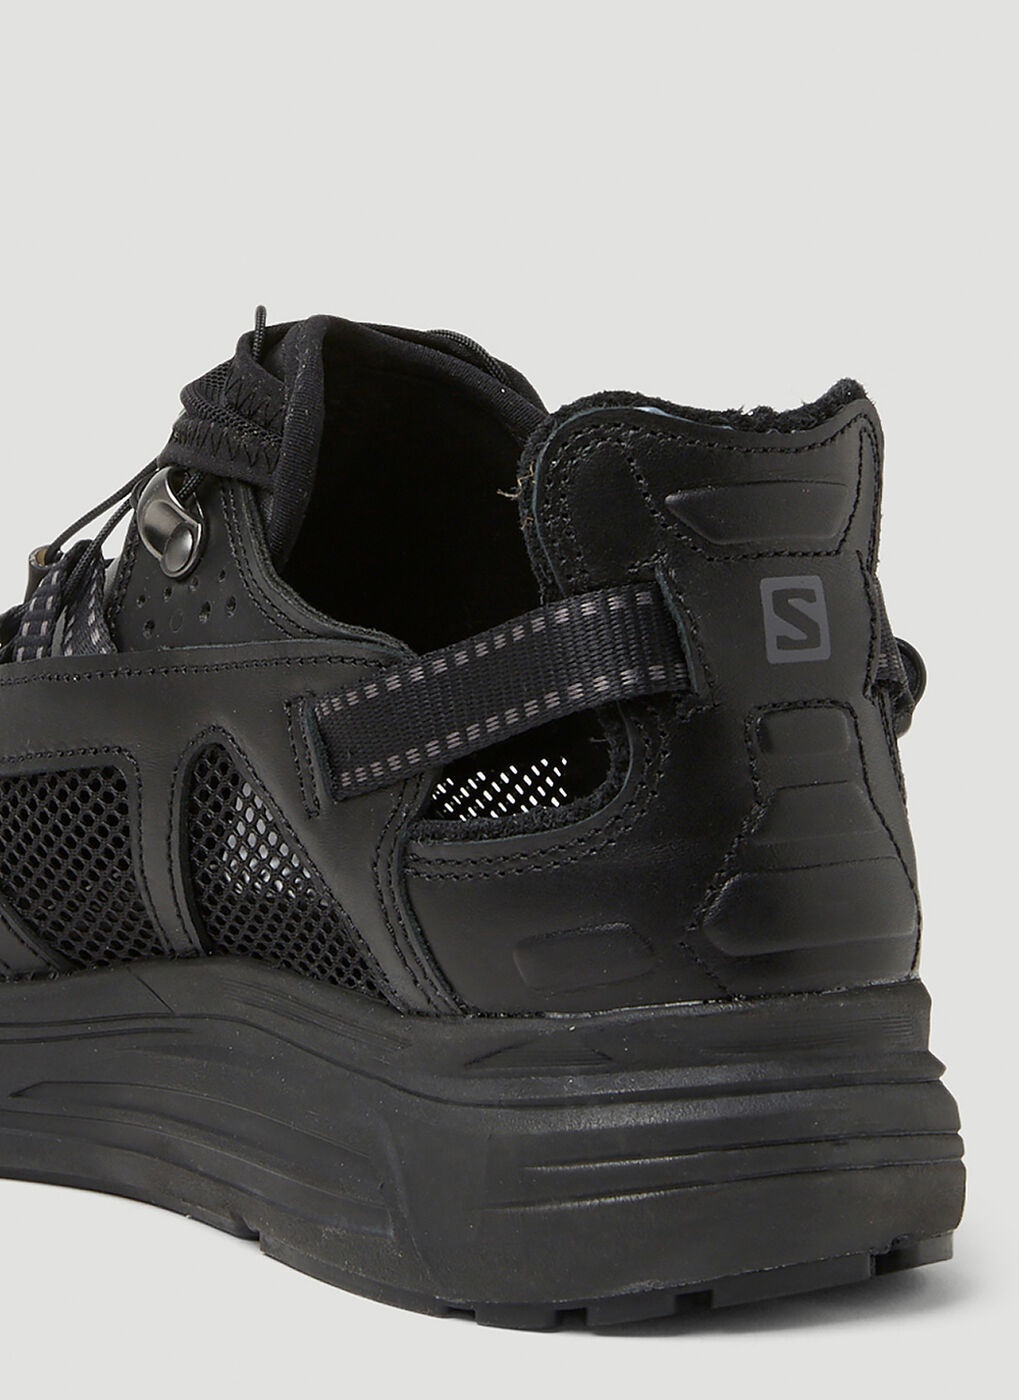 Techsonic LTR Advanced Sneakers in Black Salomon